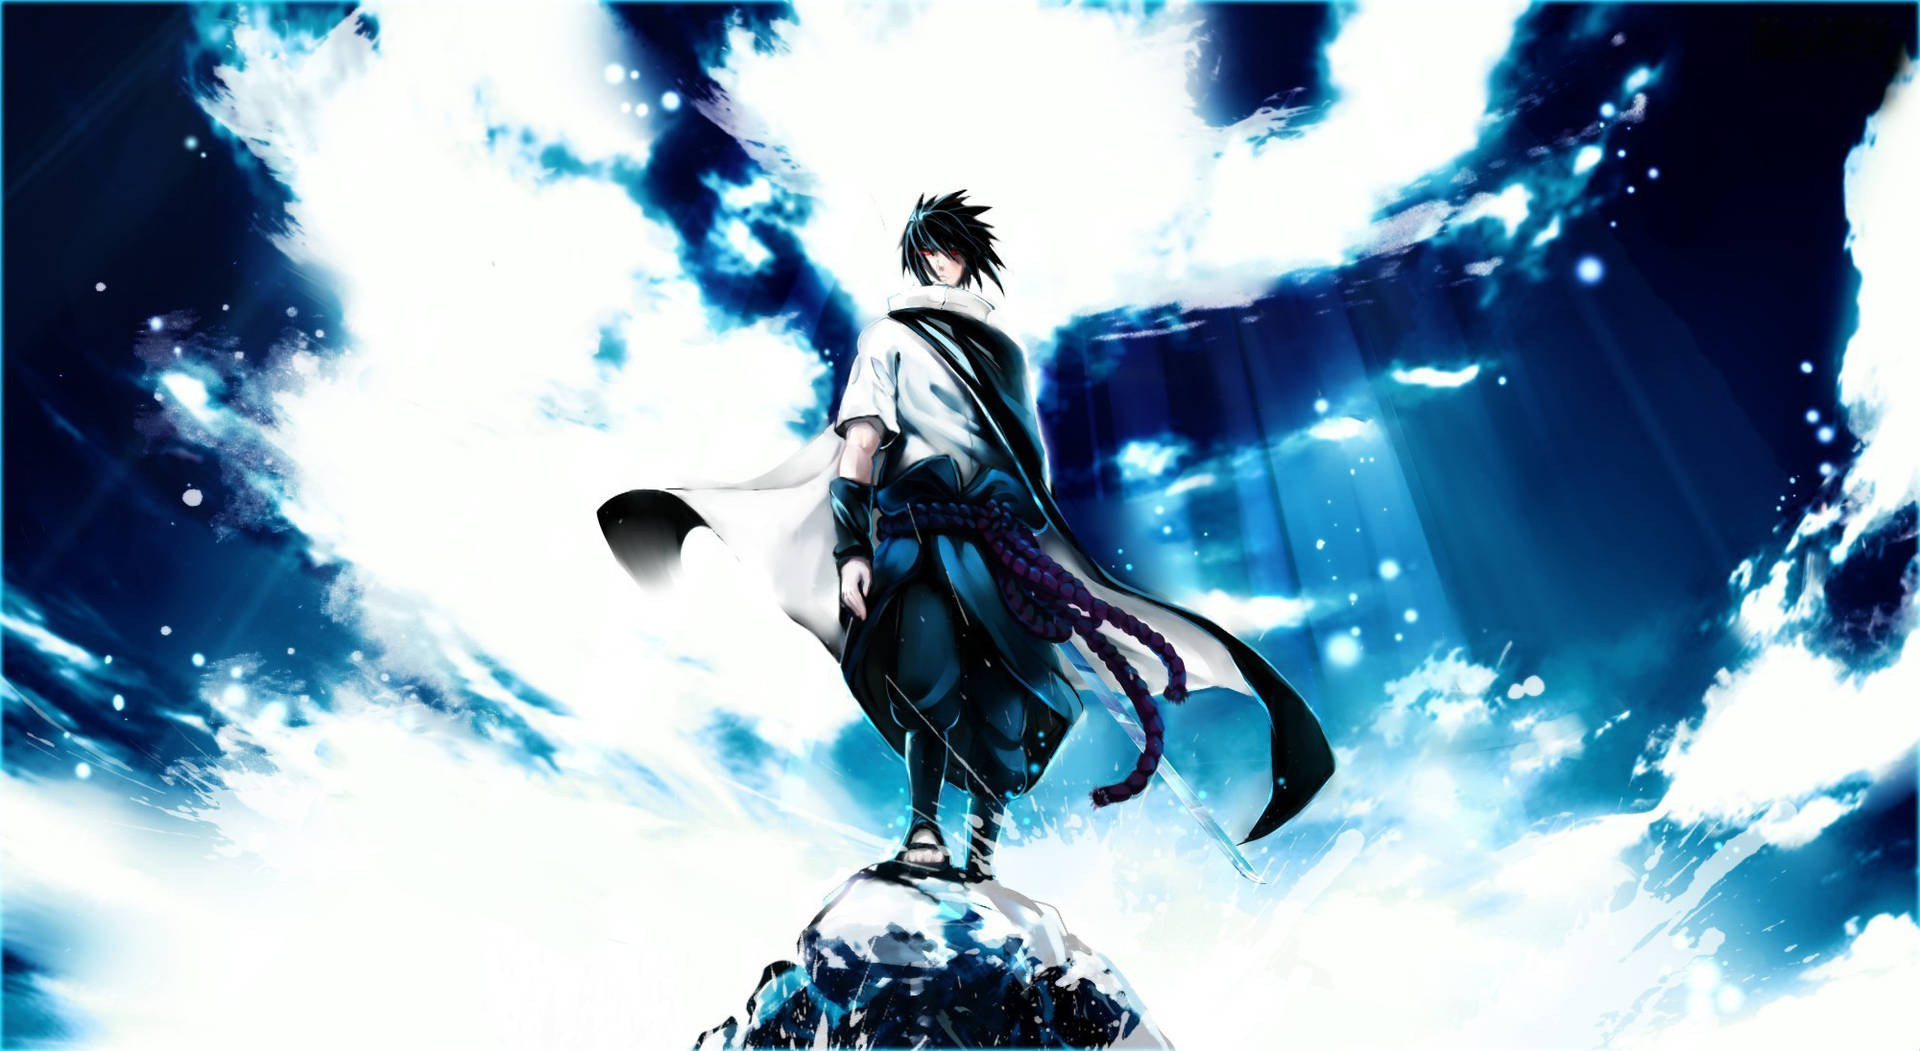 Sasuke 2000X1095 Wallpaper and Background Image